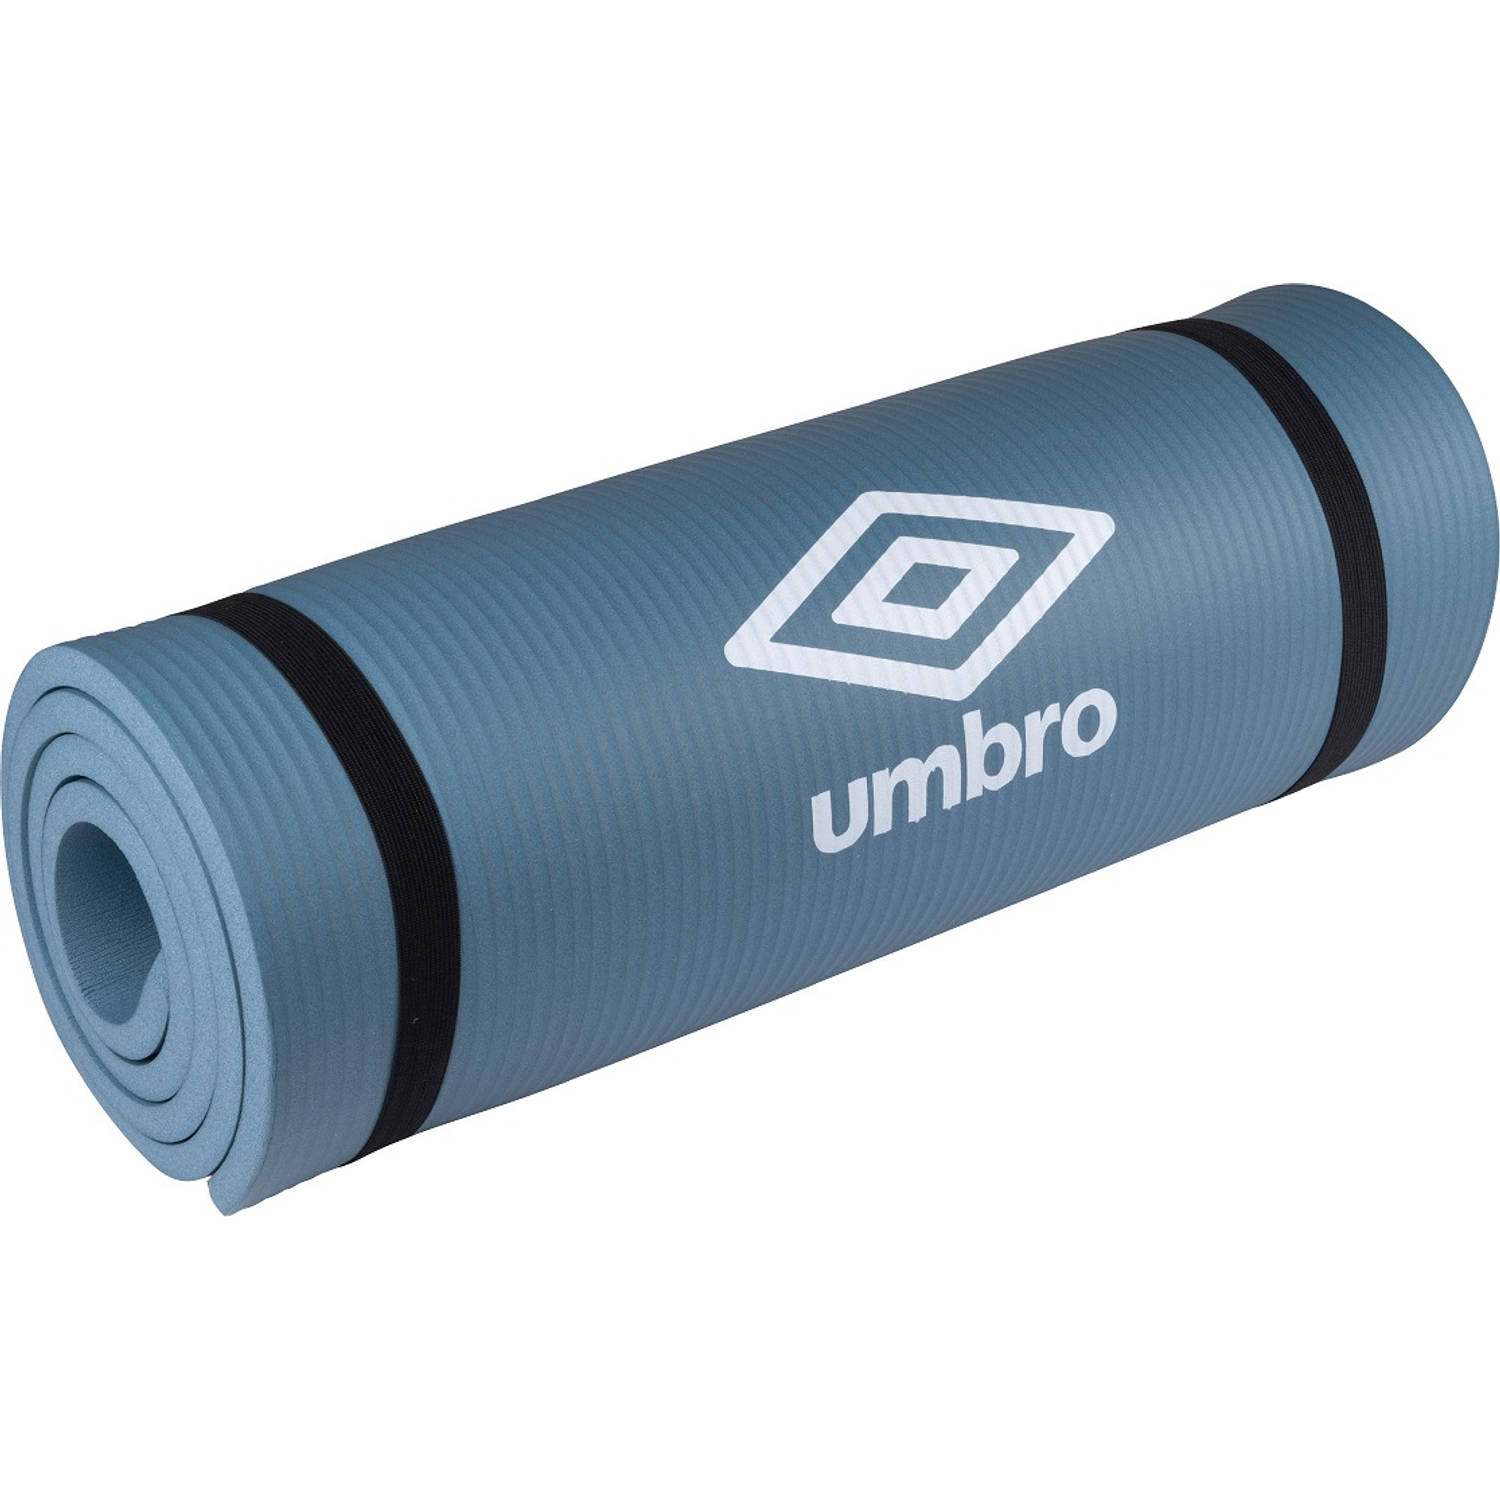 Umbro Yoga Mat 190 X 58 X 1 Cm Met Transport Band Extra Soft En 1 Cm Dik Anti-slip Fitness Mat Blauw